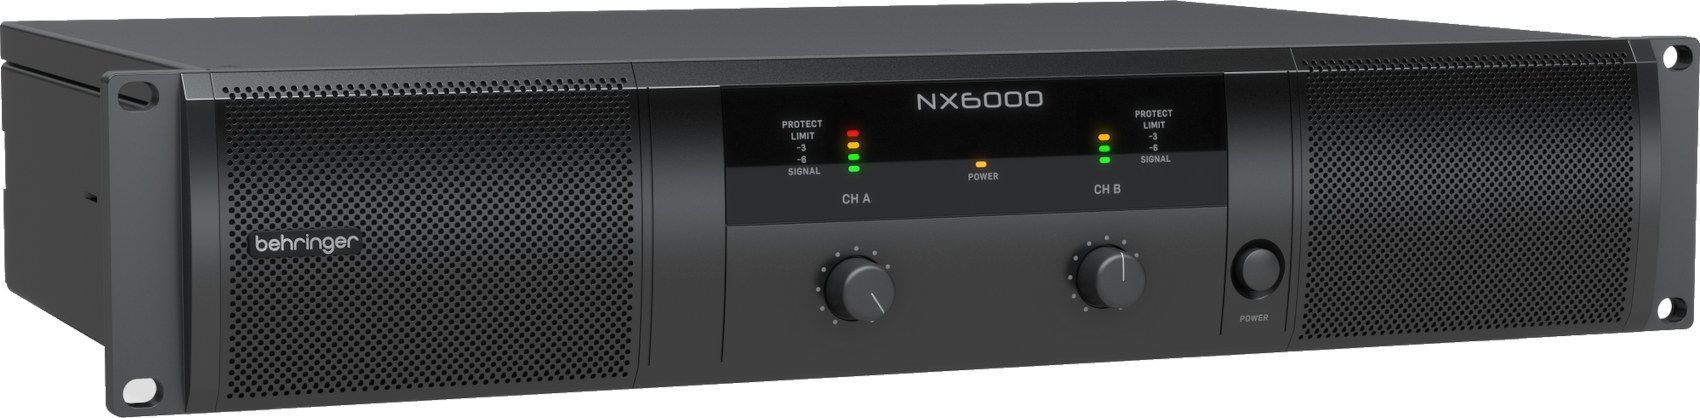 Behringer NX6000 - фото 4